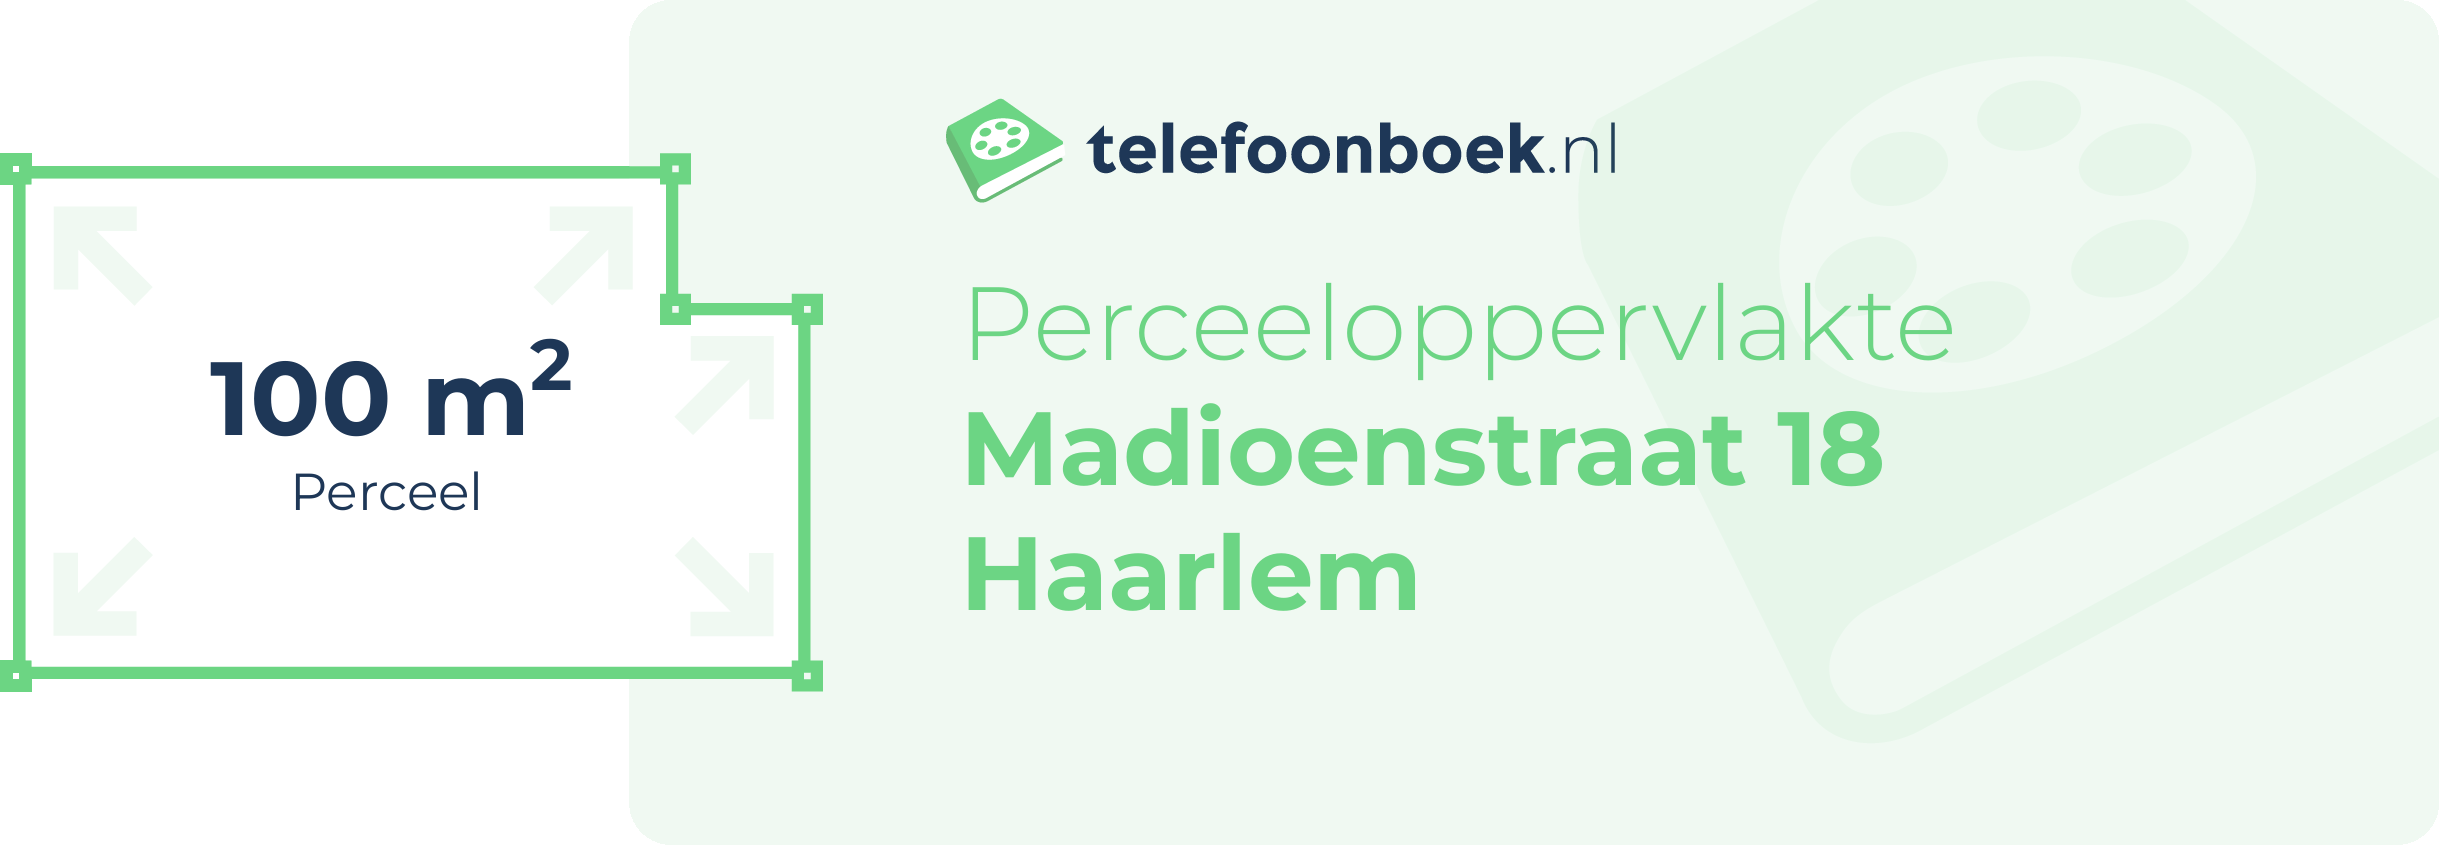 Perceeloppervlakte Madioenstraat 18 Haarlem